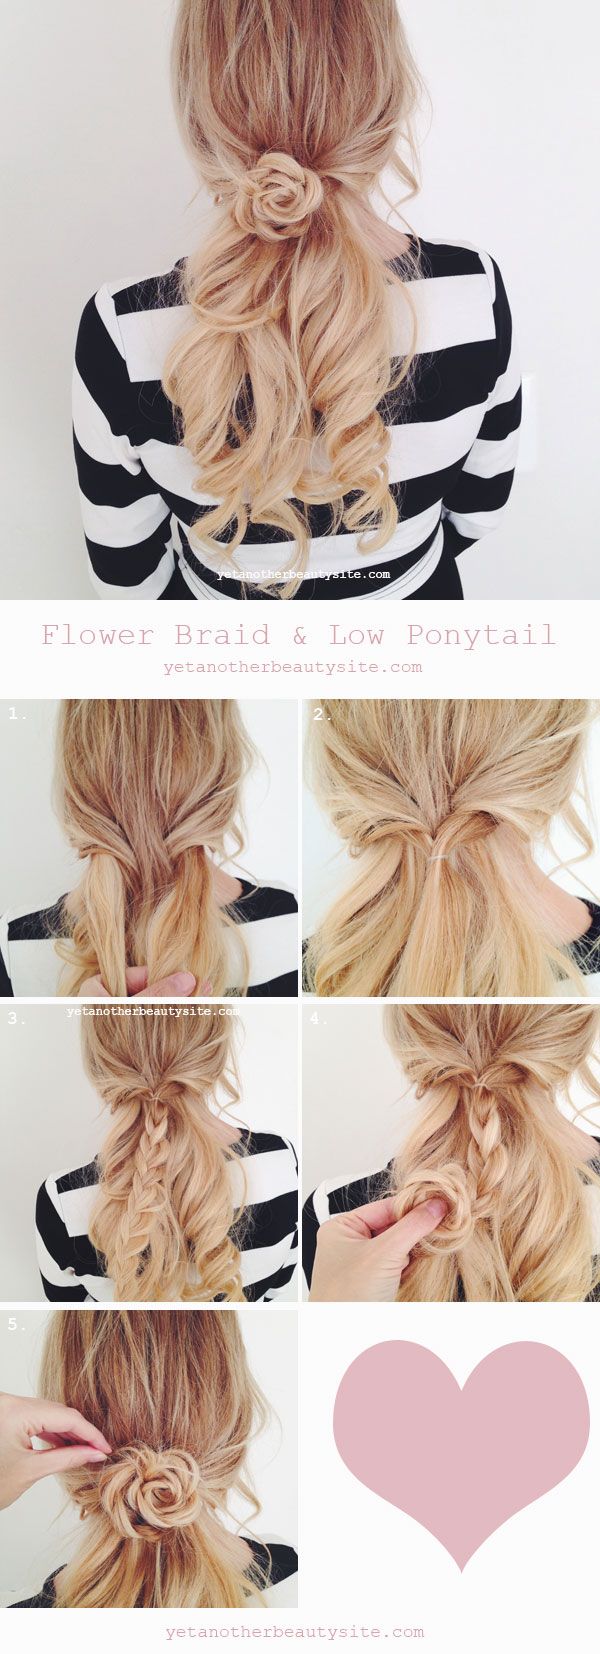 Flower Braid Low Ponytail Hairstyle Tutorial